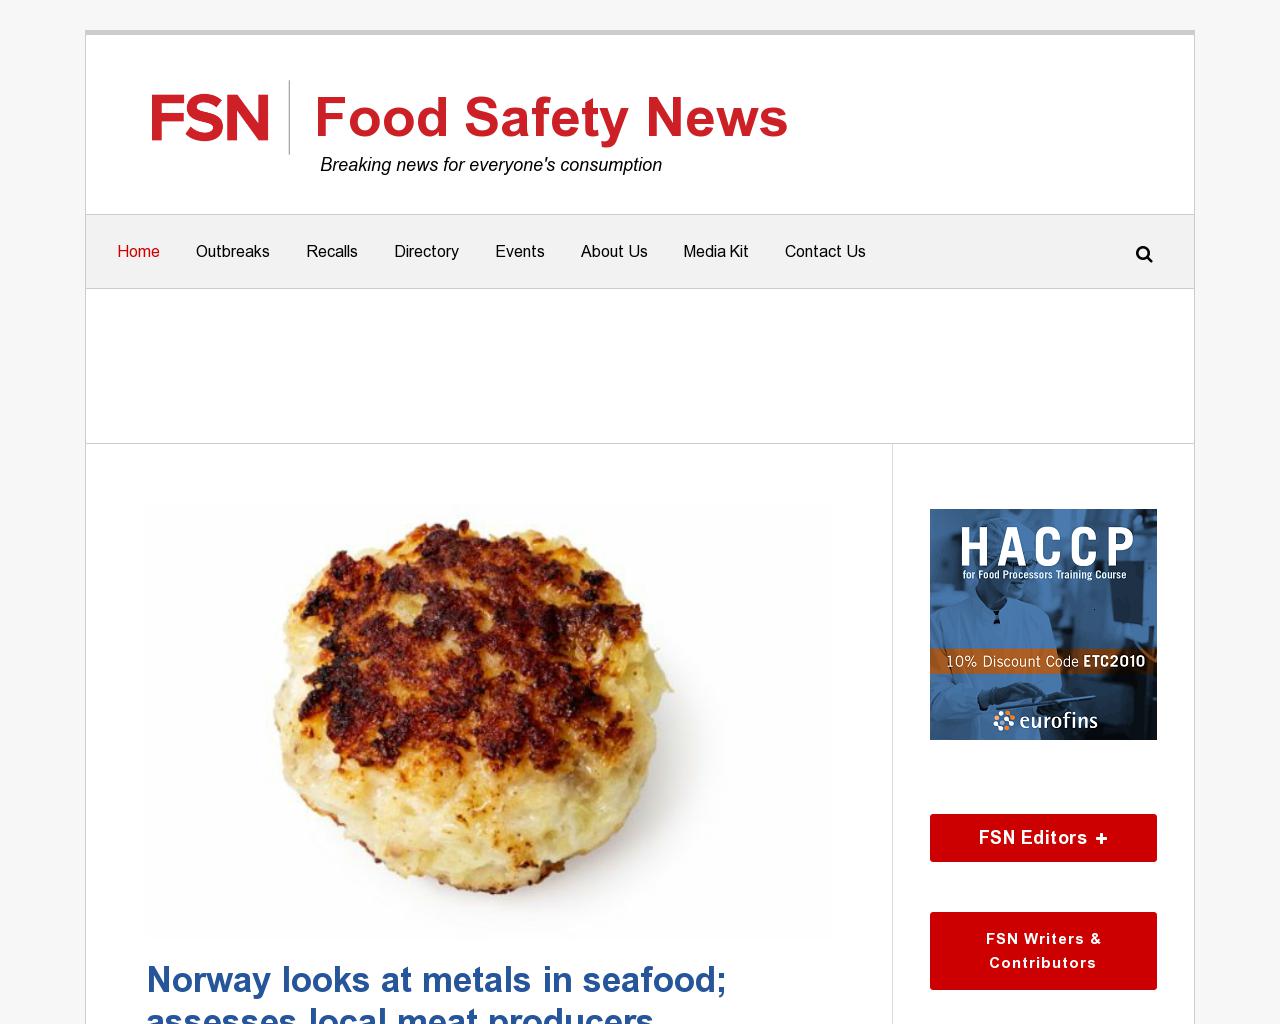 foodsafetynews.com